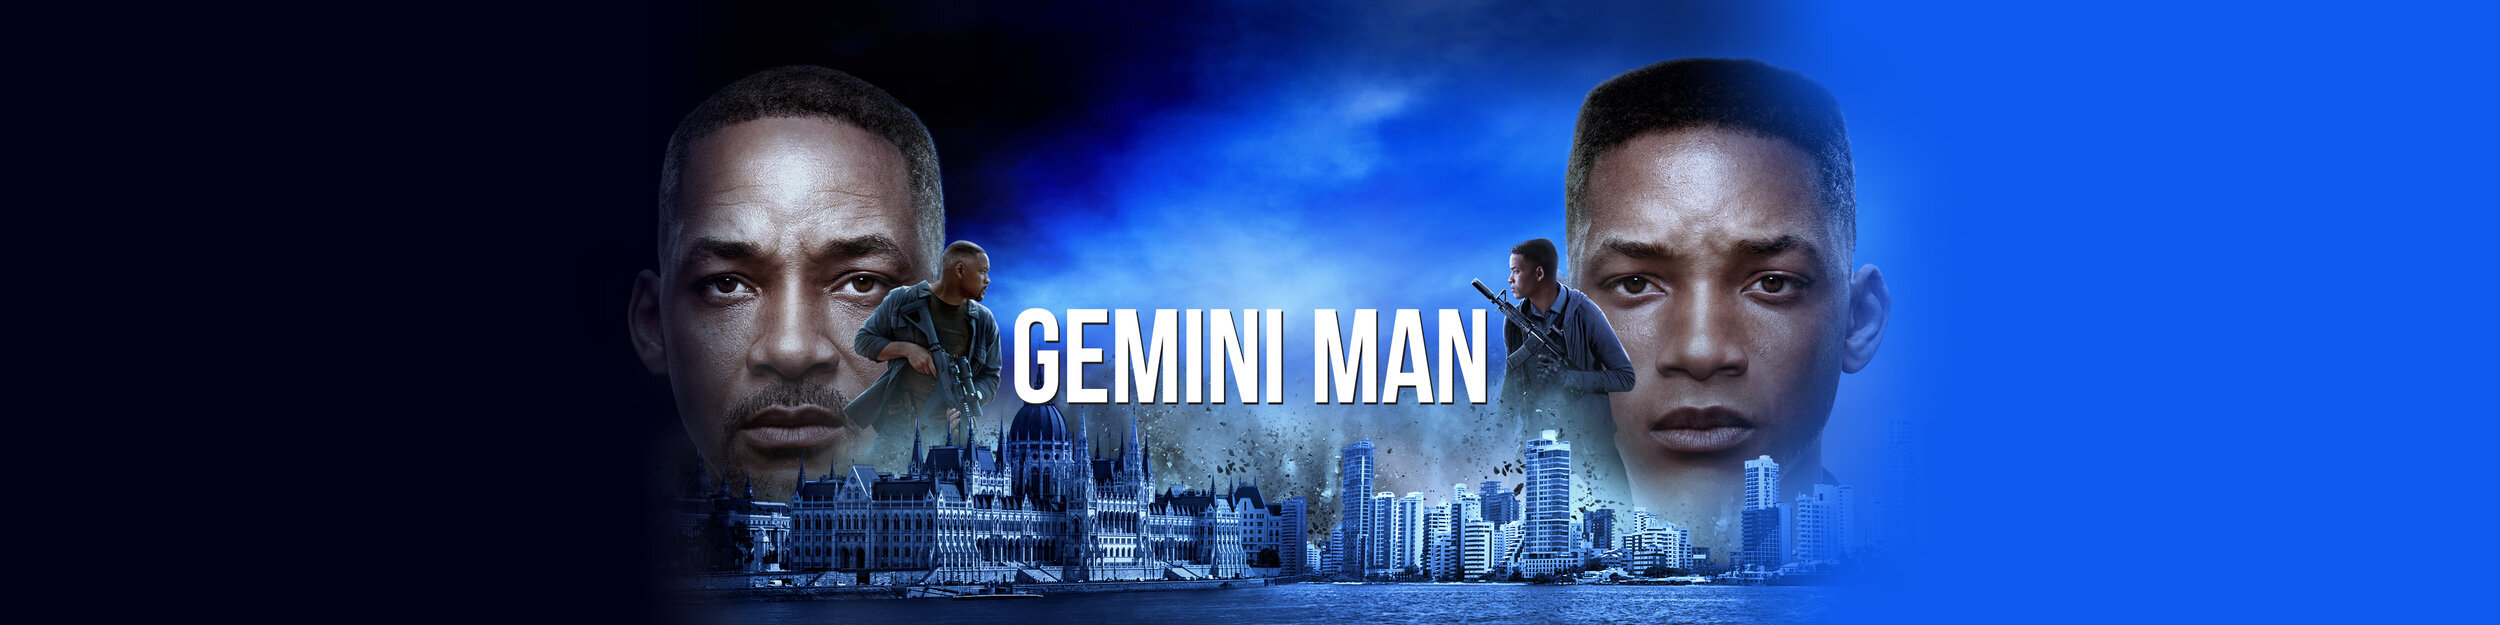 GeminiMan_2019_Preorder_iTunes_Featuring_4320x1080_JM4.jpg